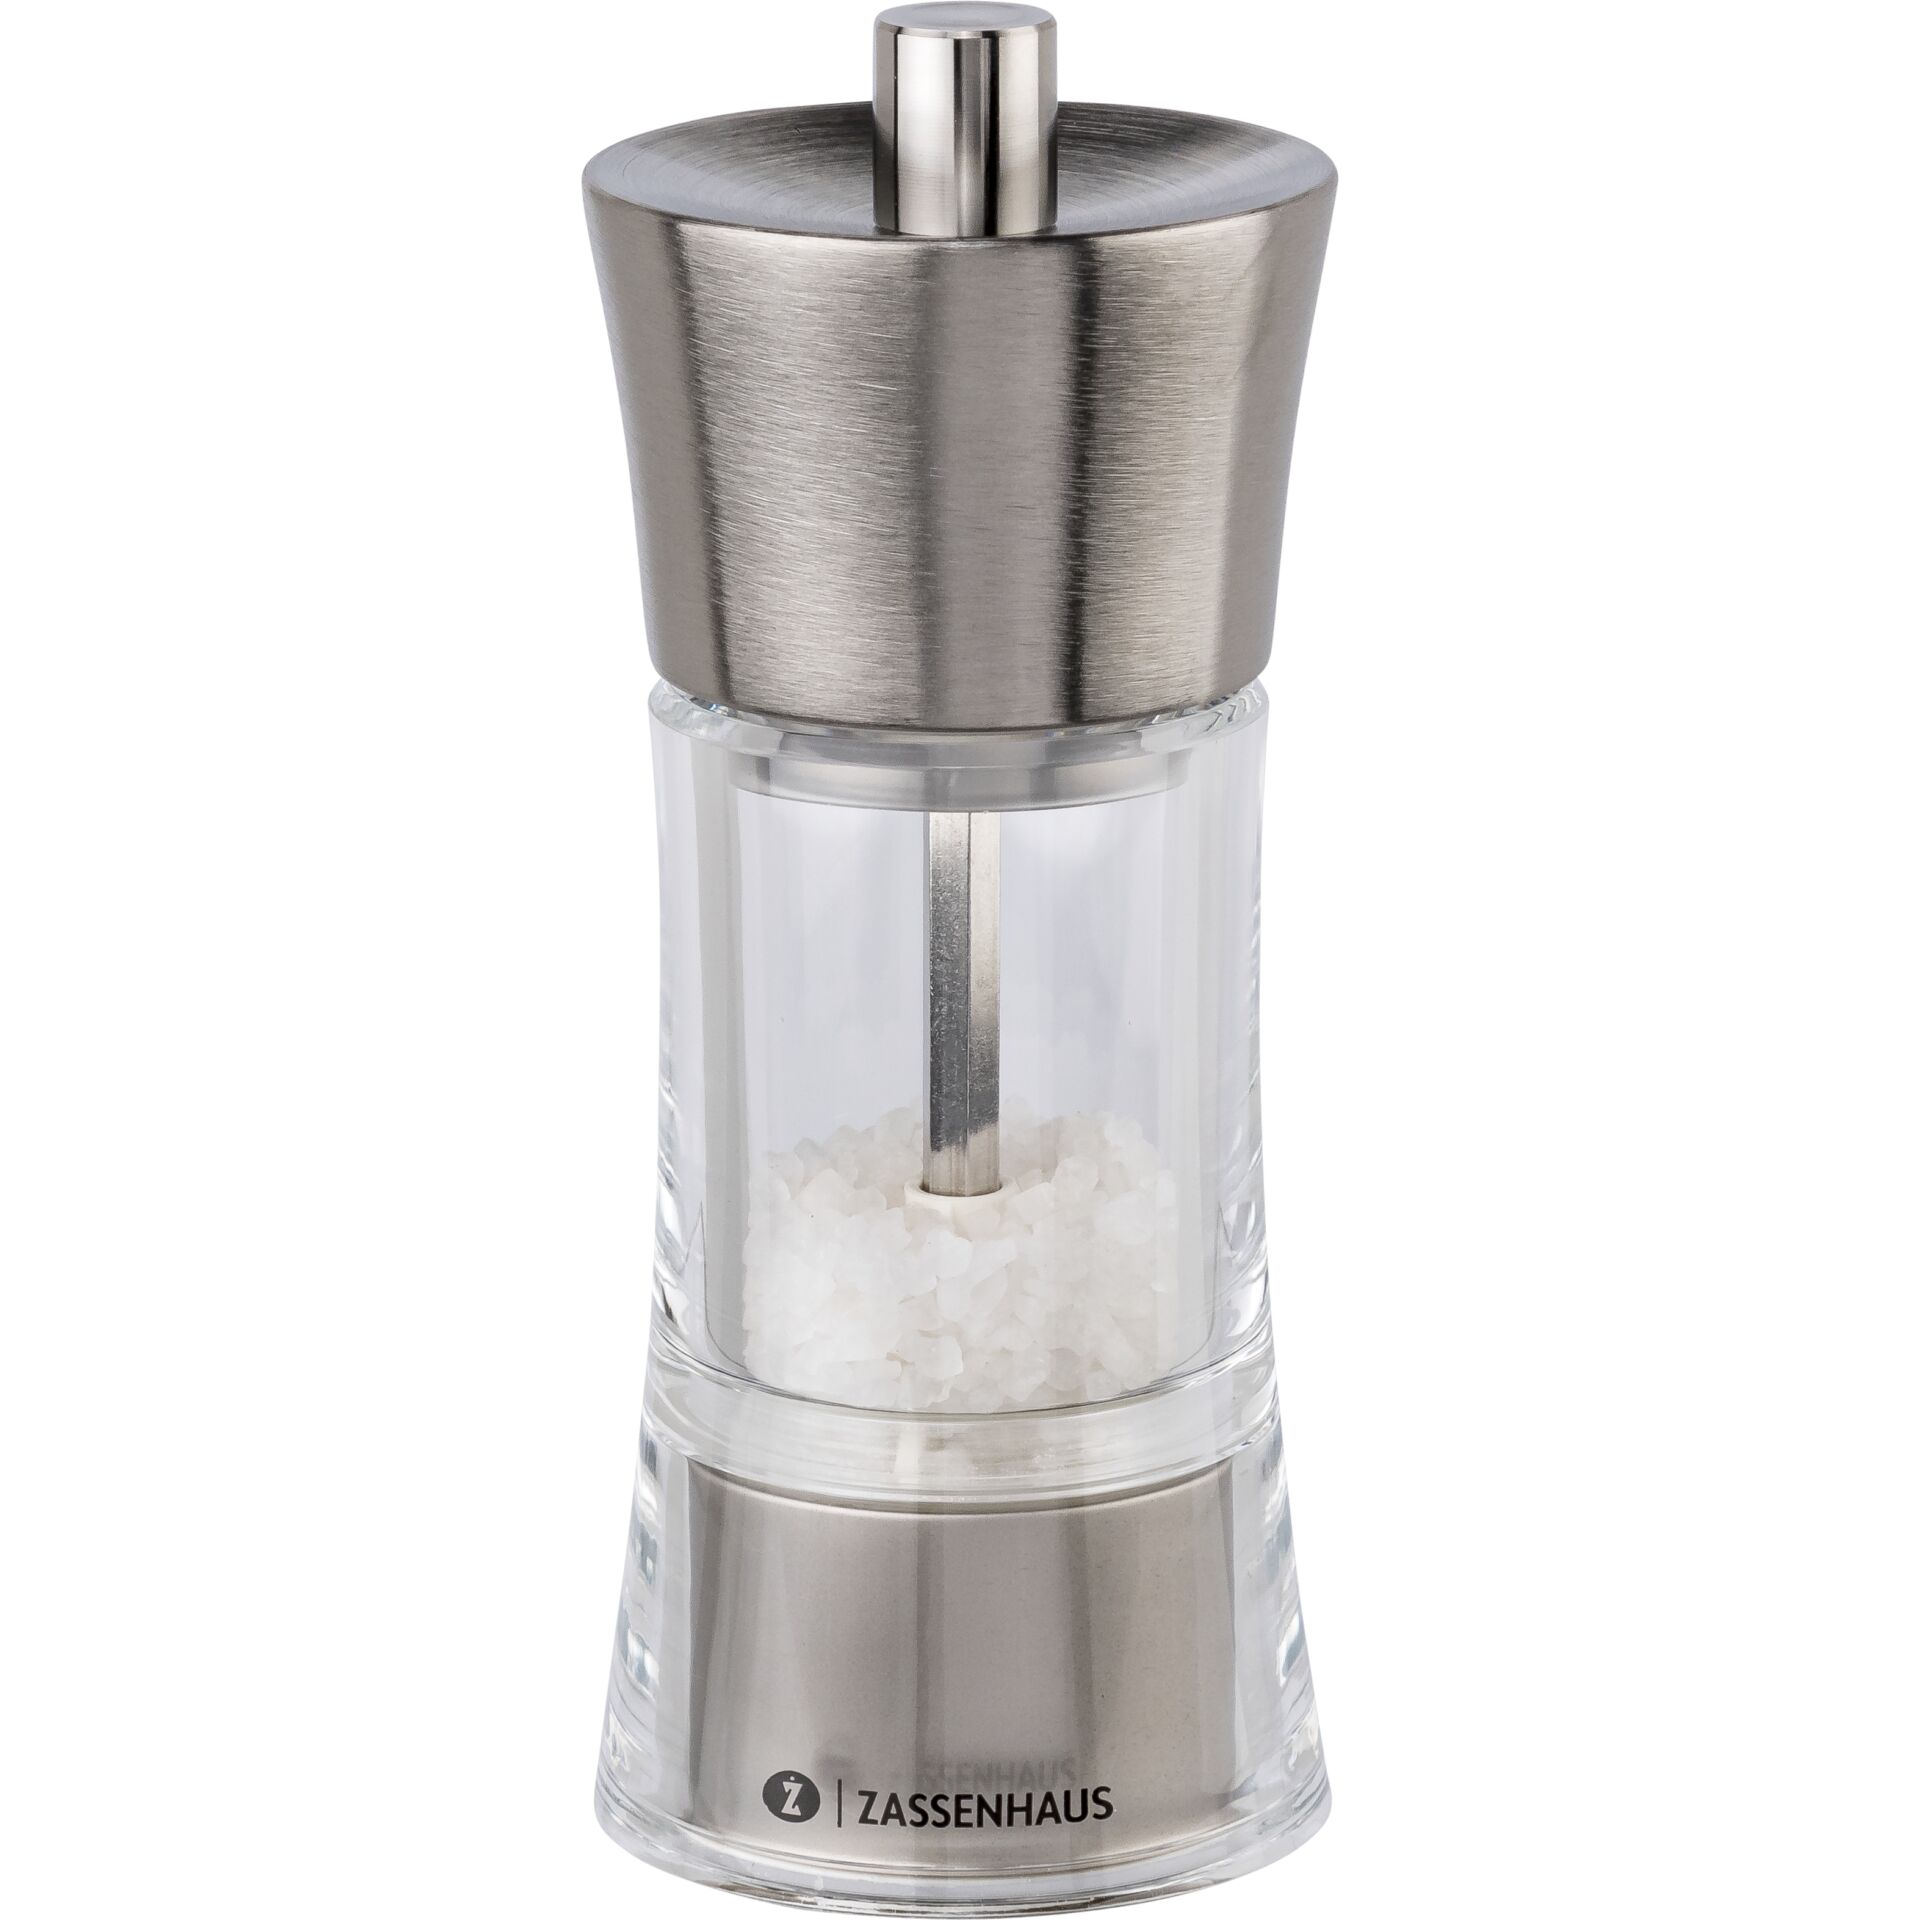 Zassenhaus 035292 Salt & pepper grinder Stainless steel, Transparent